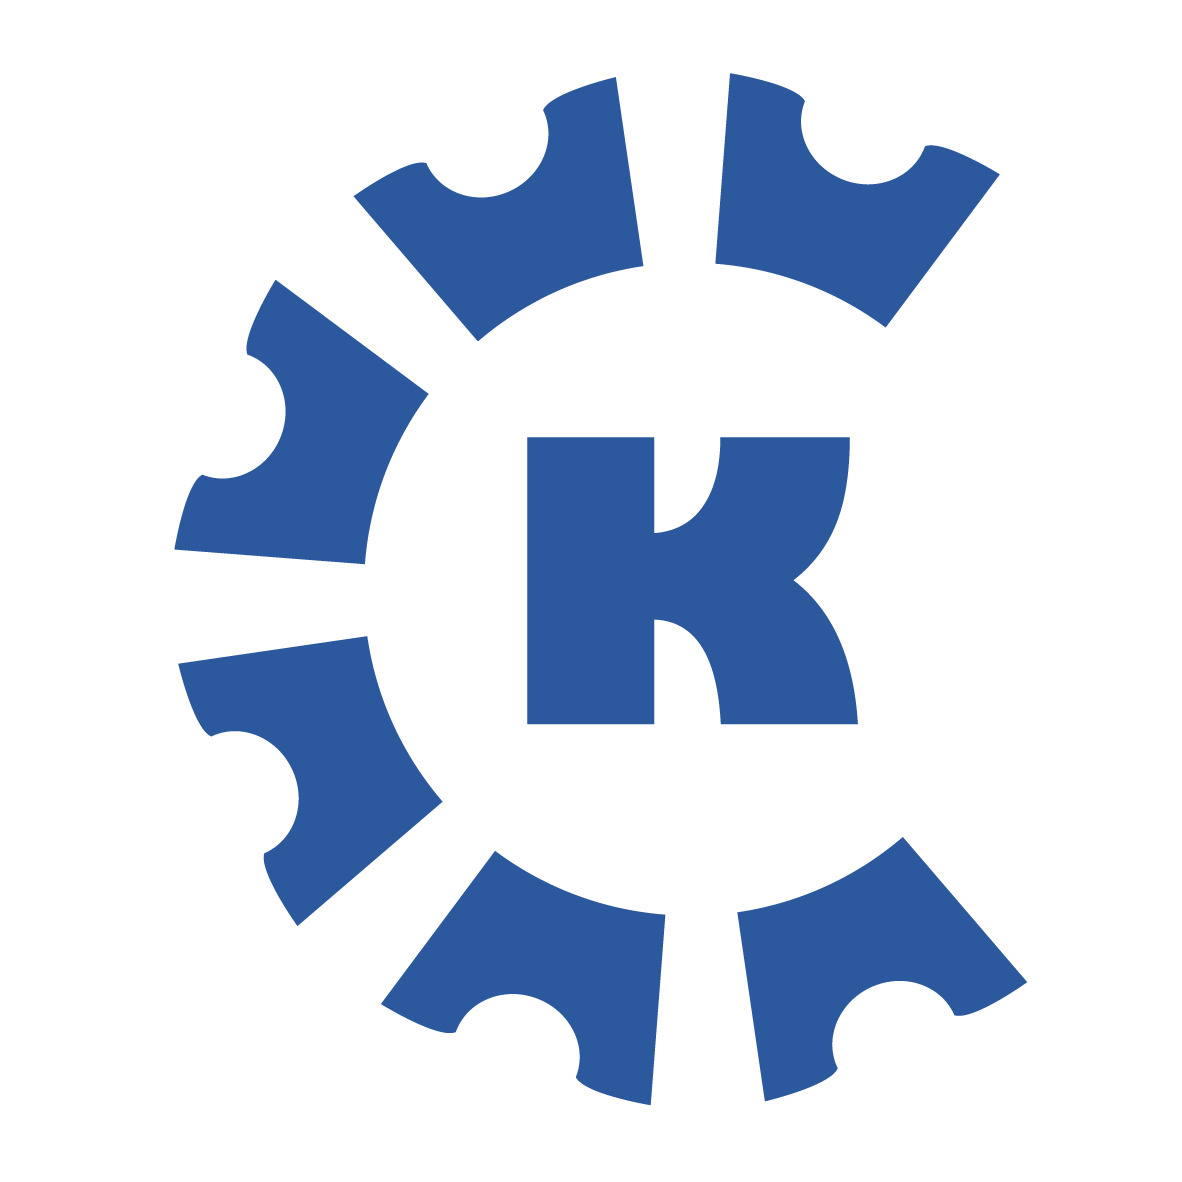 //kentechengineering.com/wp-content/uploads/2021/01/Kentch-logo_kek.png